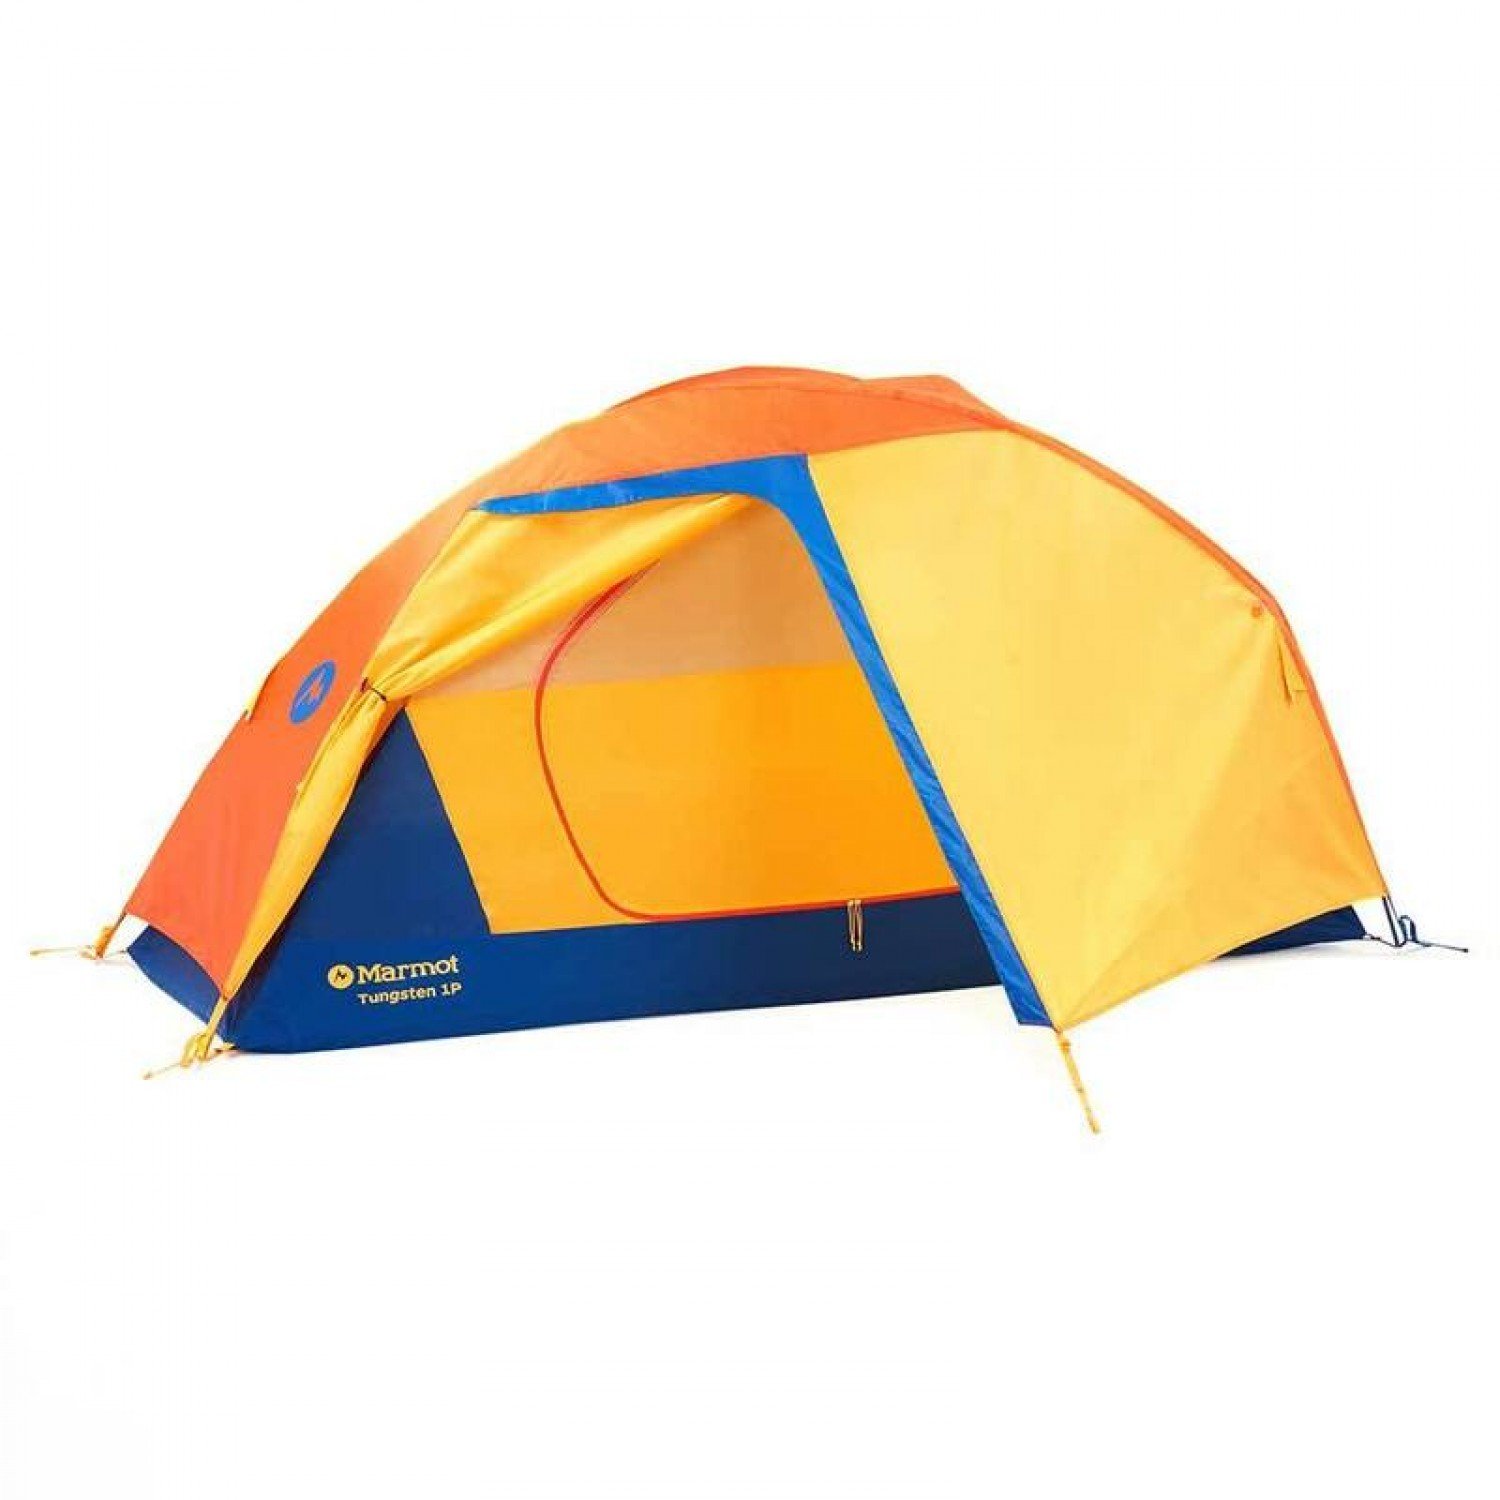 Marmot Tungsten 1P Adventure Tent - Solar/Red Sun - Complete Outdoors NZ